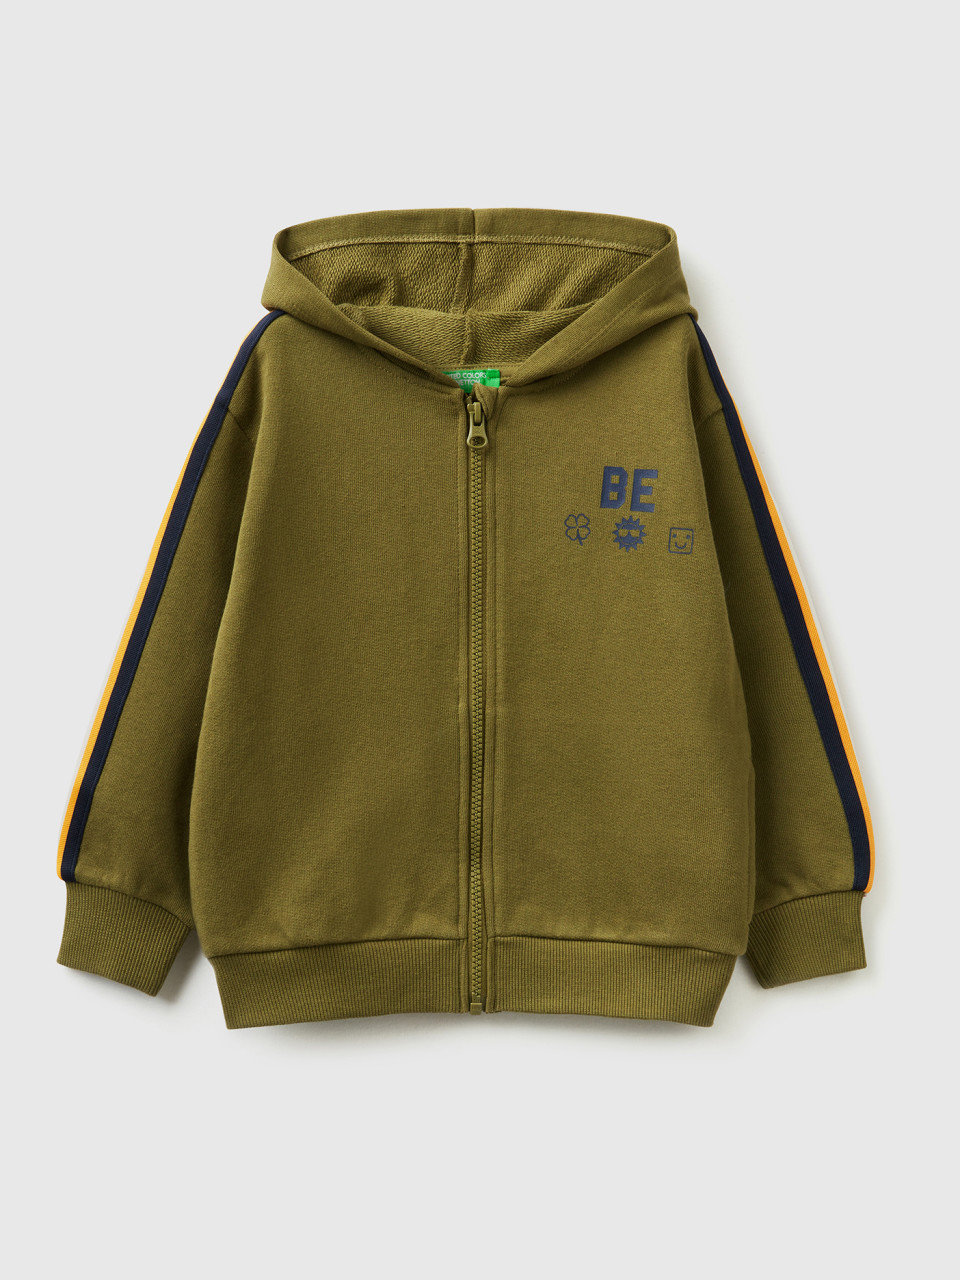 Benetton, Sweatshirt With be Print, Military Green, Kids